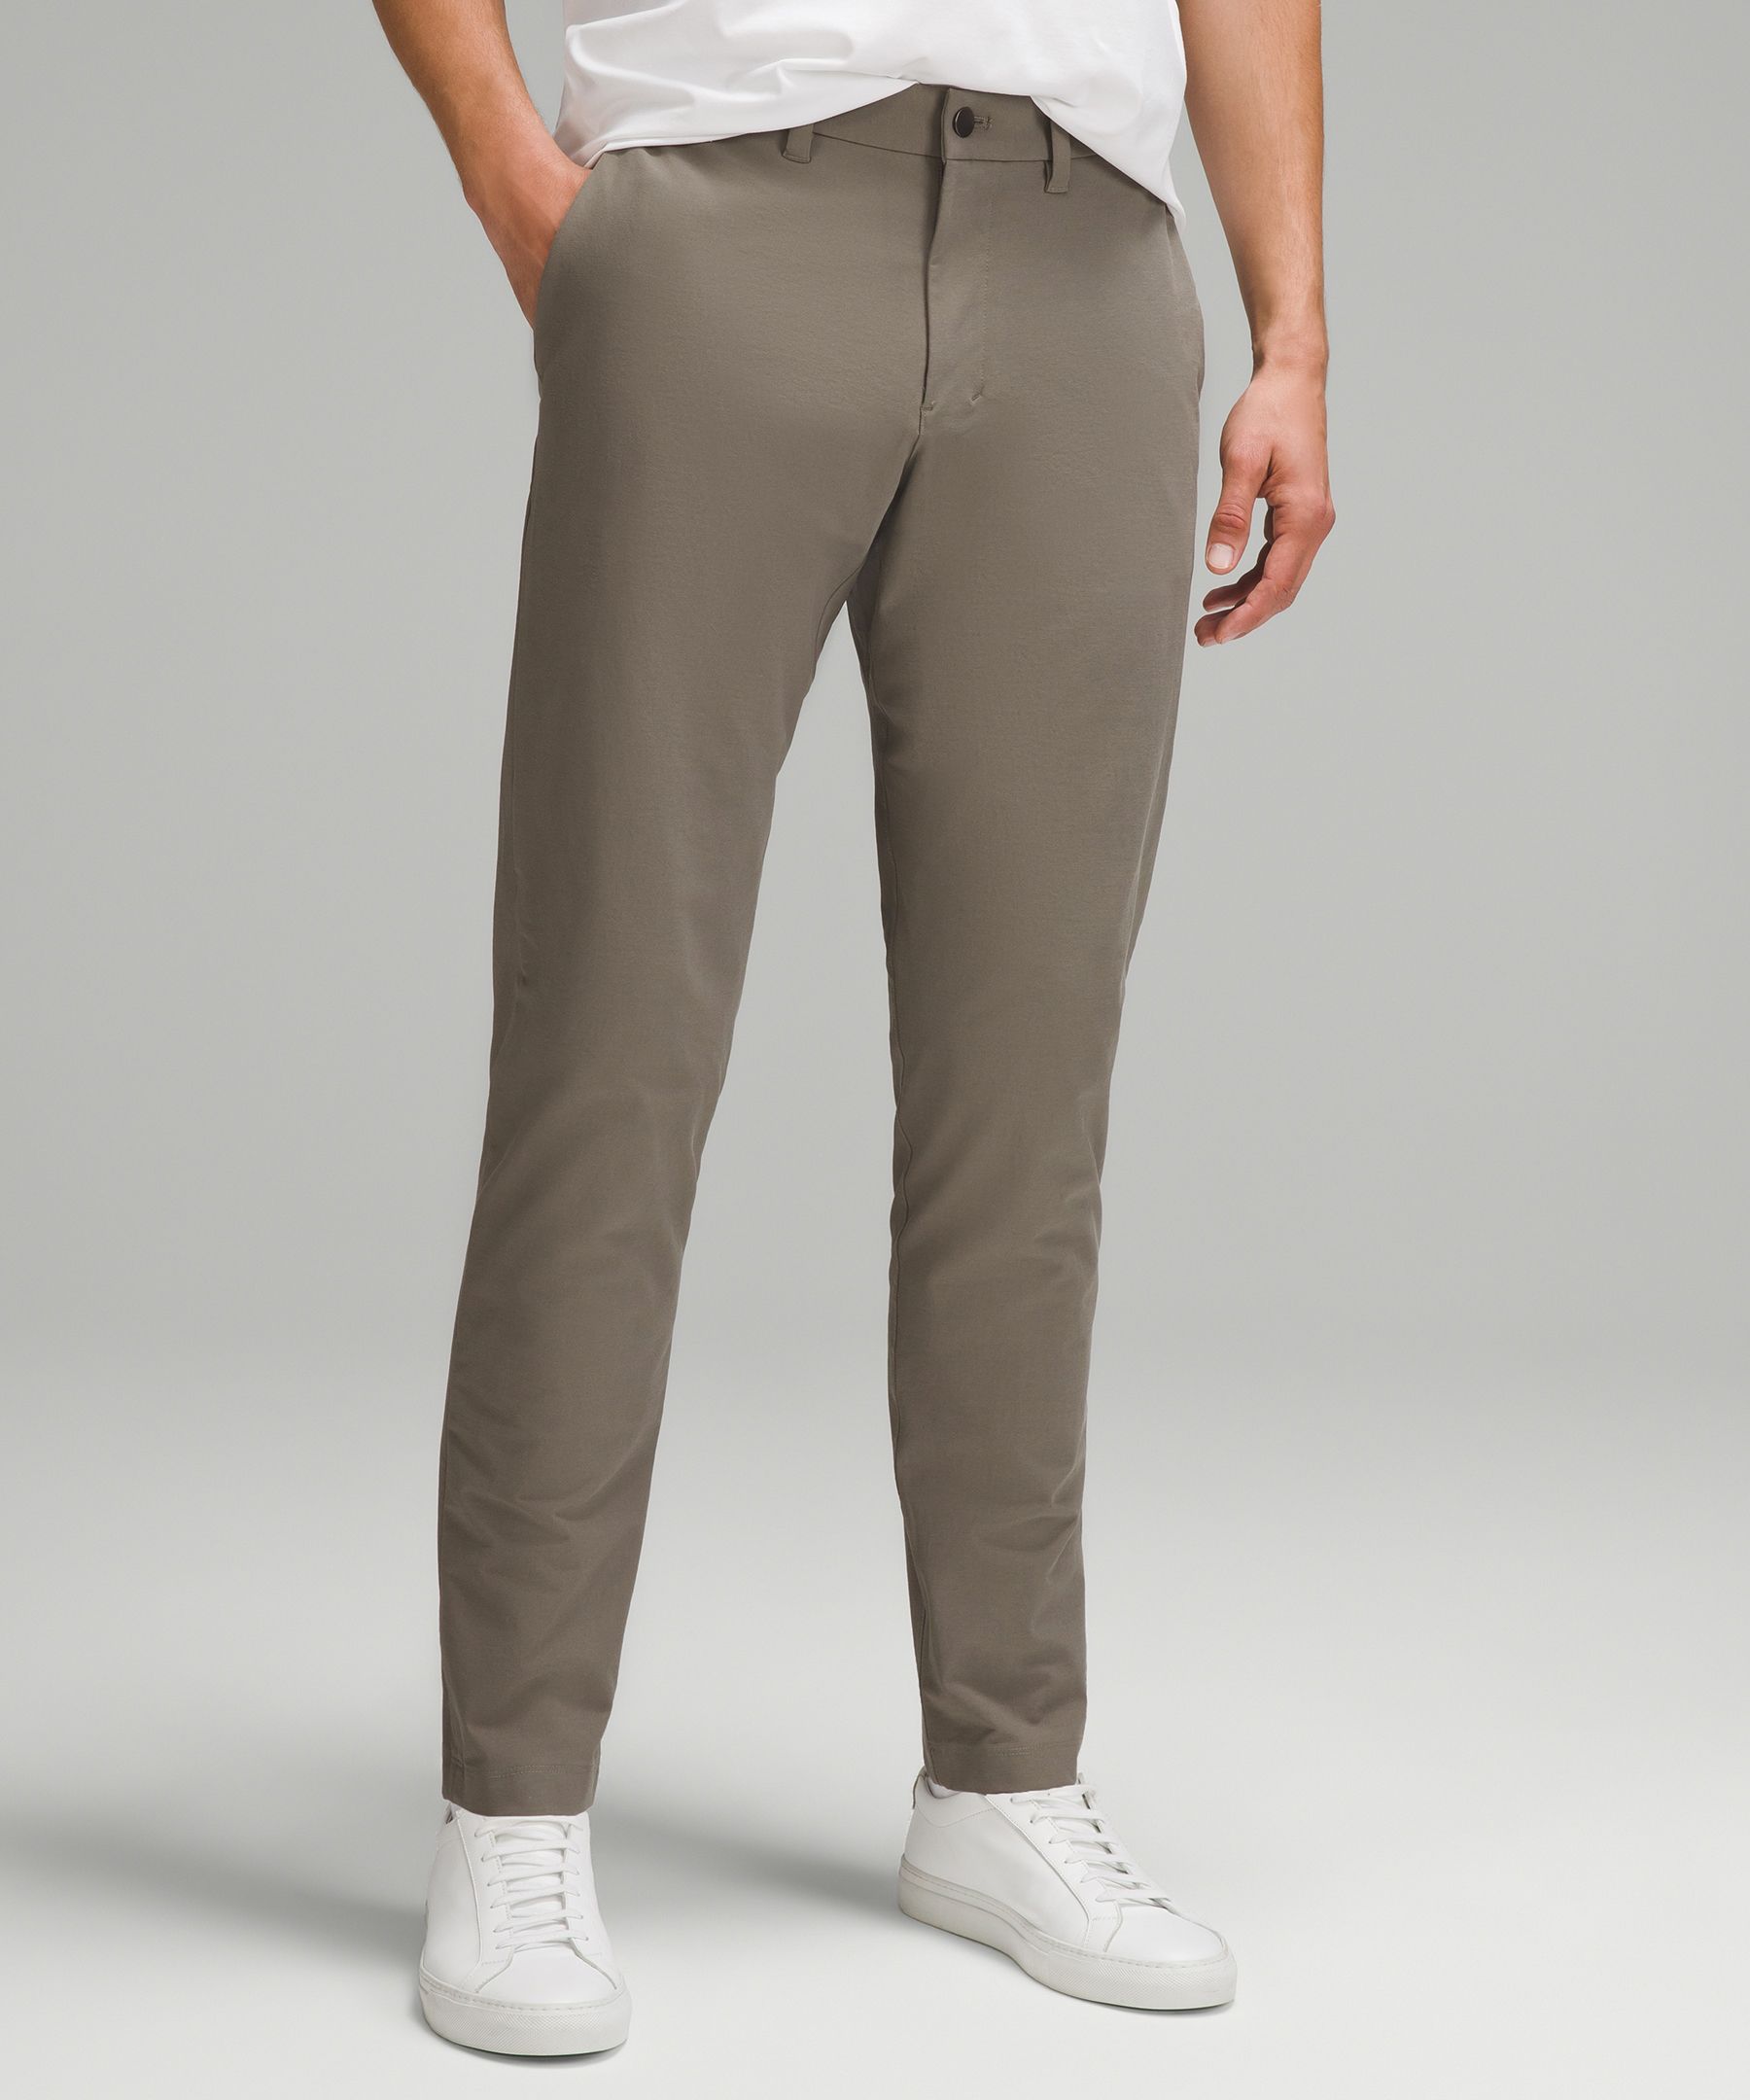 ABC Slim-Fit Trouser 32L *Stretch Cotton VersaTwill